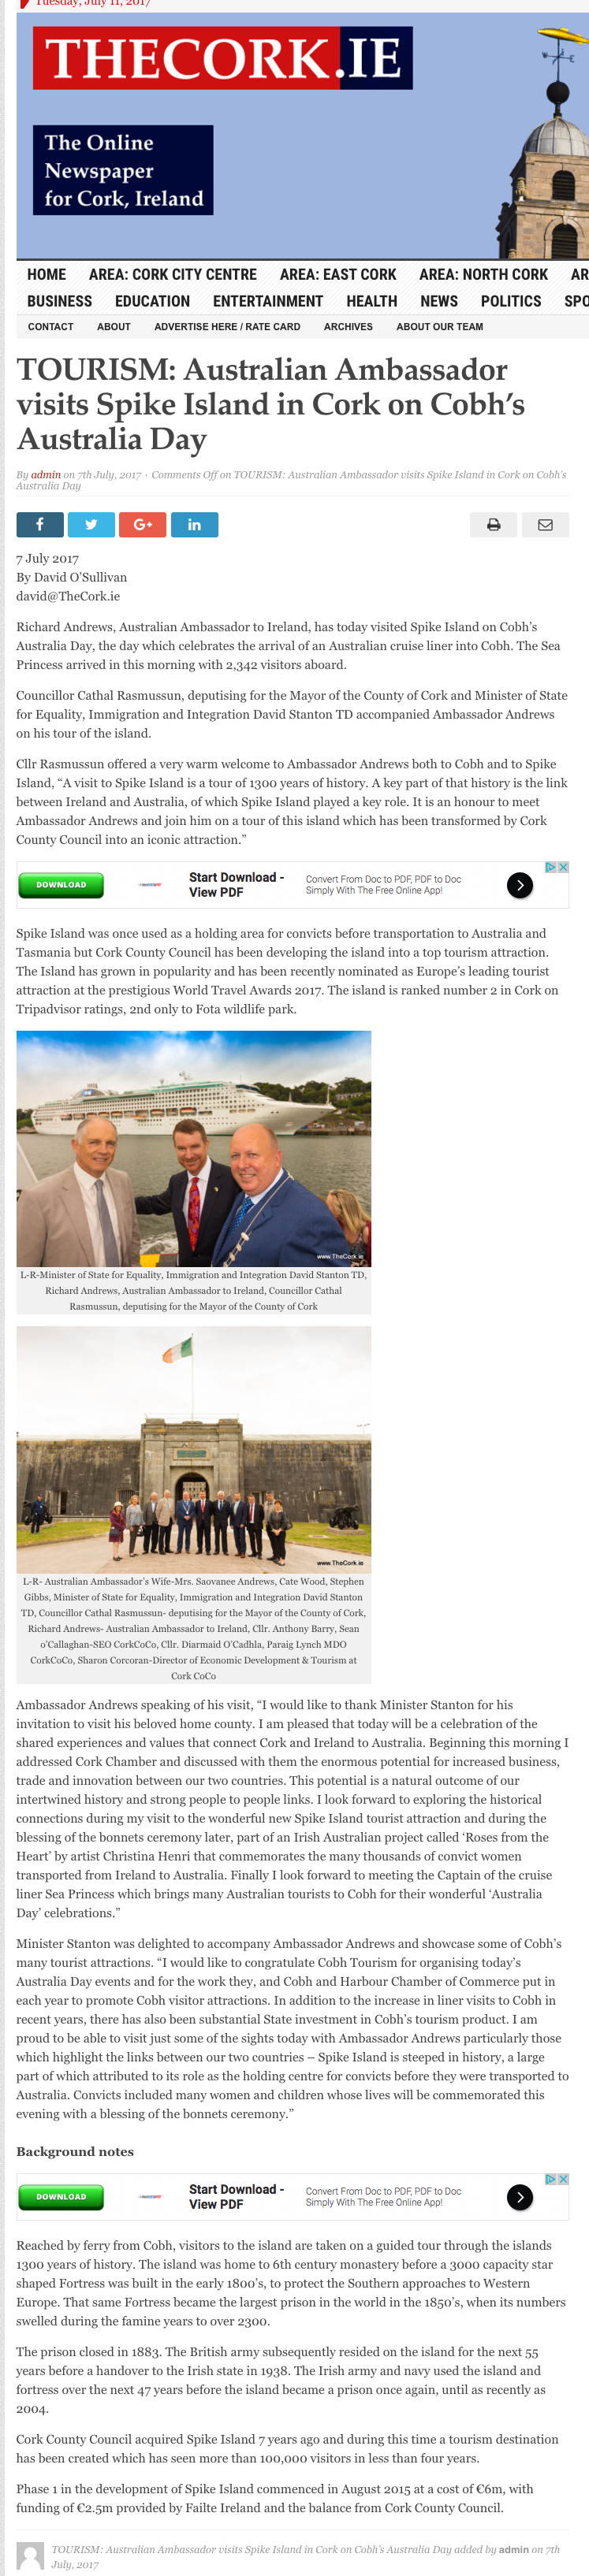 TOURISM: Australian Ambassador visits Spike Island in Cork on Cobh’s Australia Day